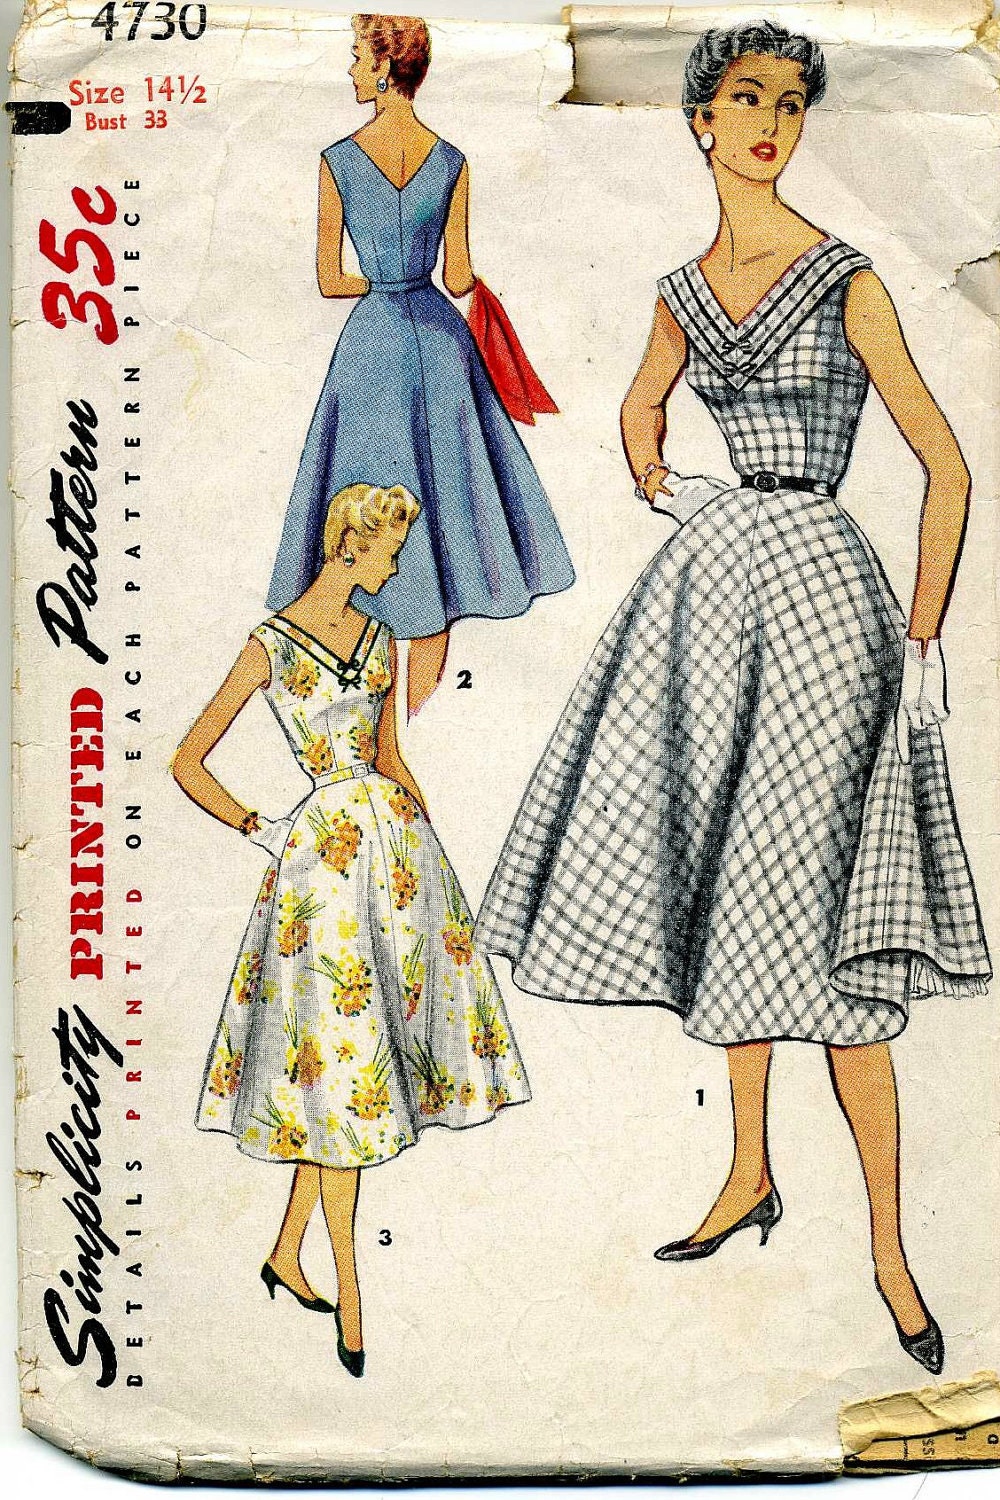 CLOSING SALE 1950s Dress Pattern Simplicity 4730 Bust 33 Half